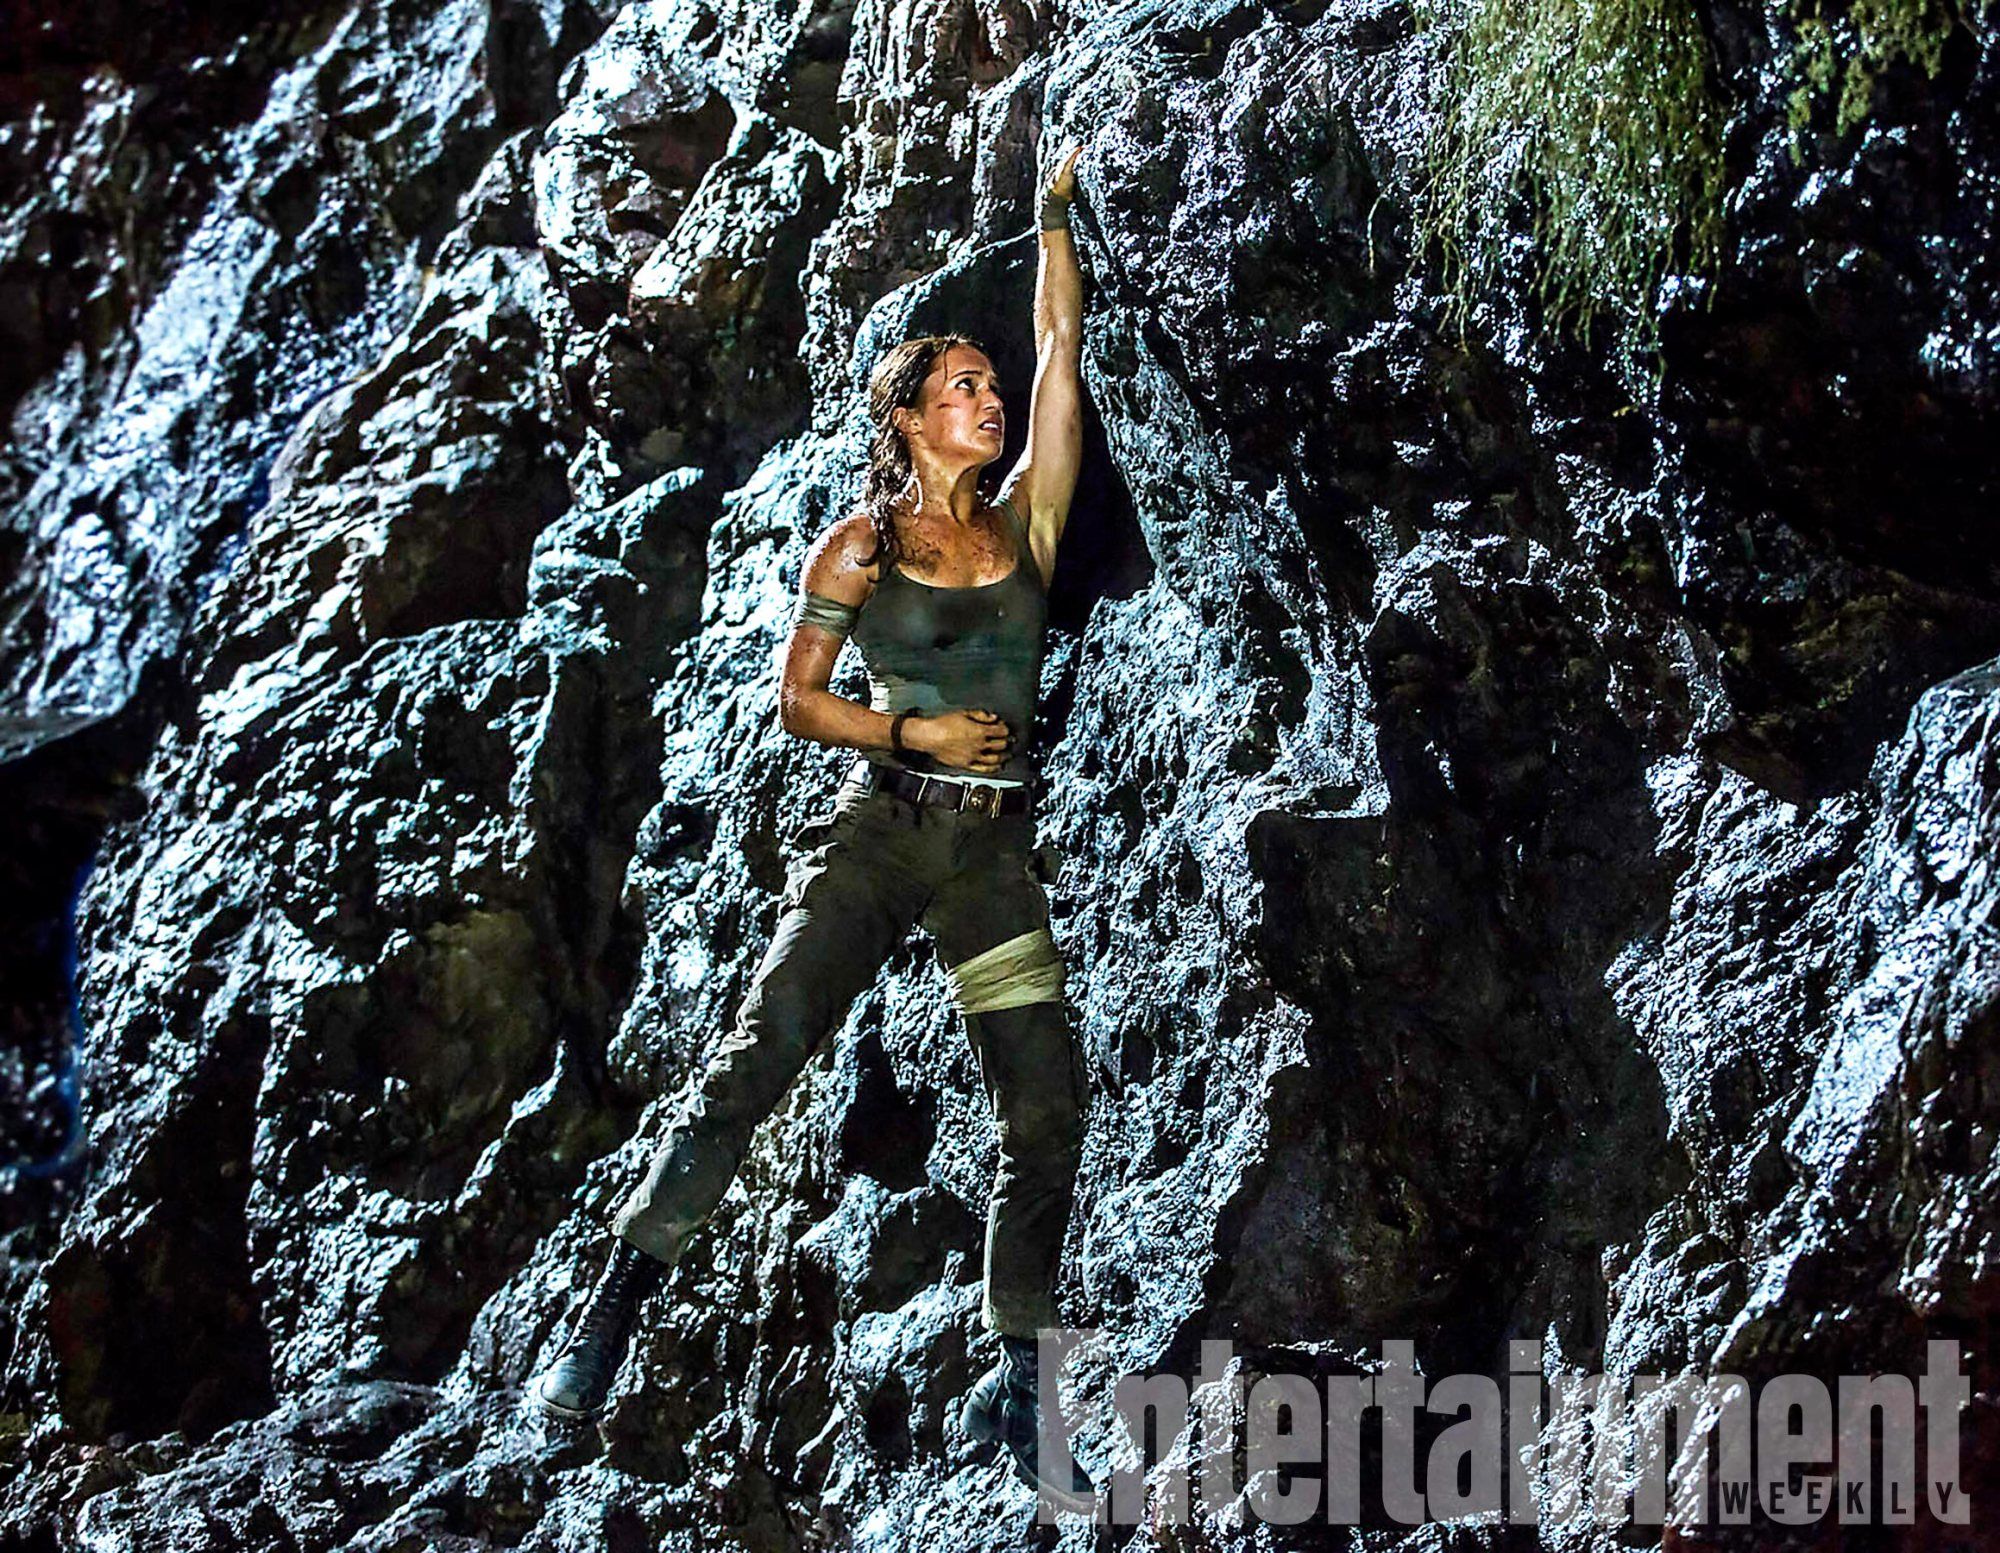 New Image of Alicia Vikander as Lara Croft